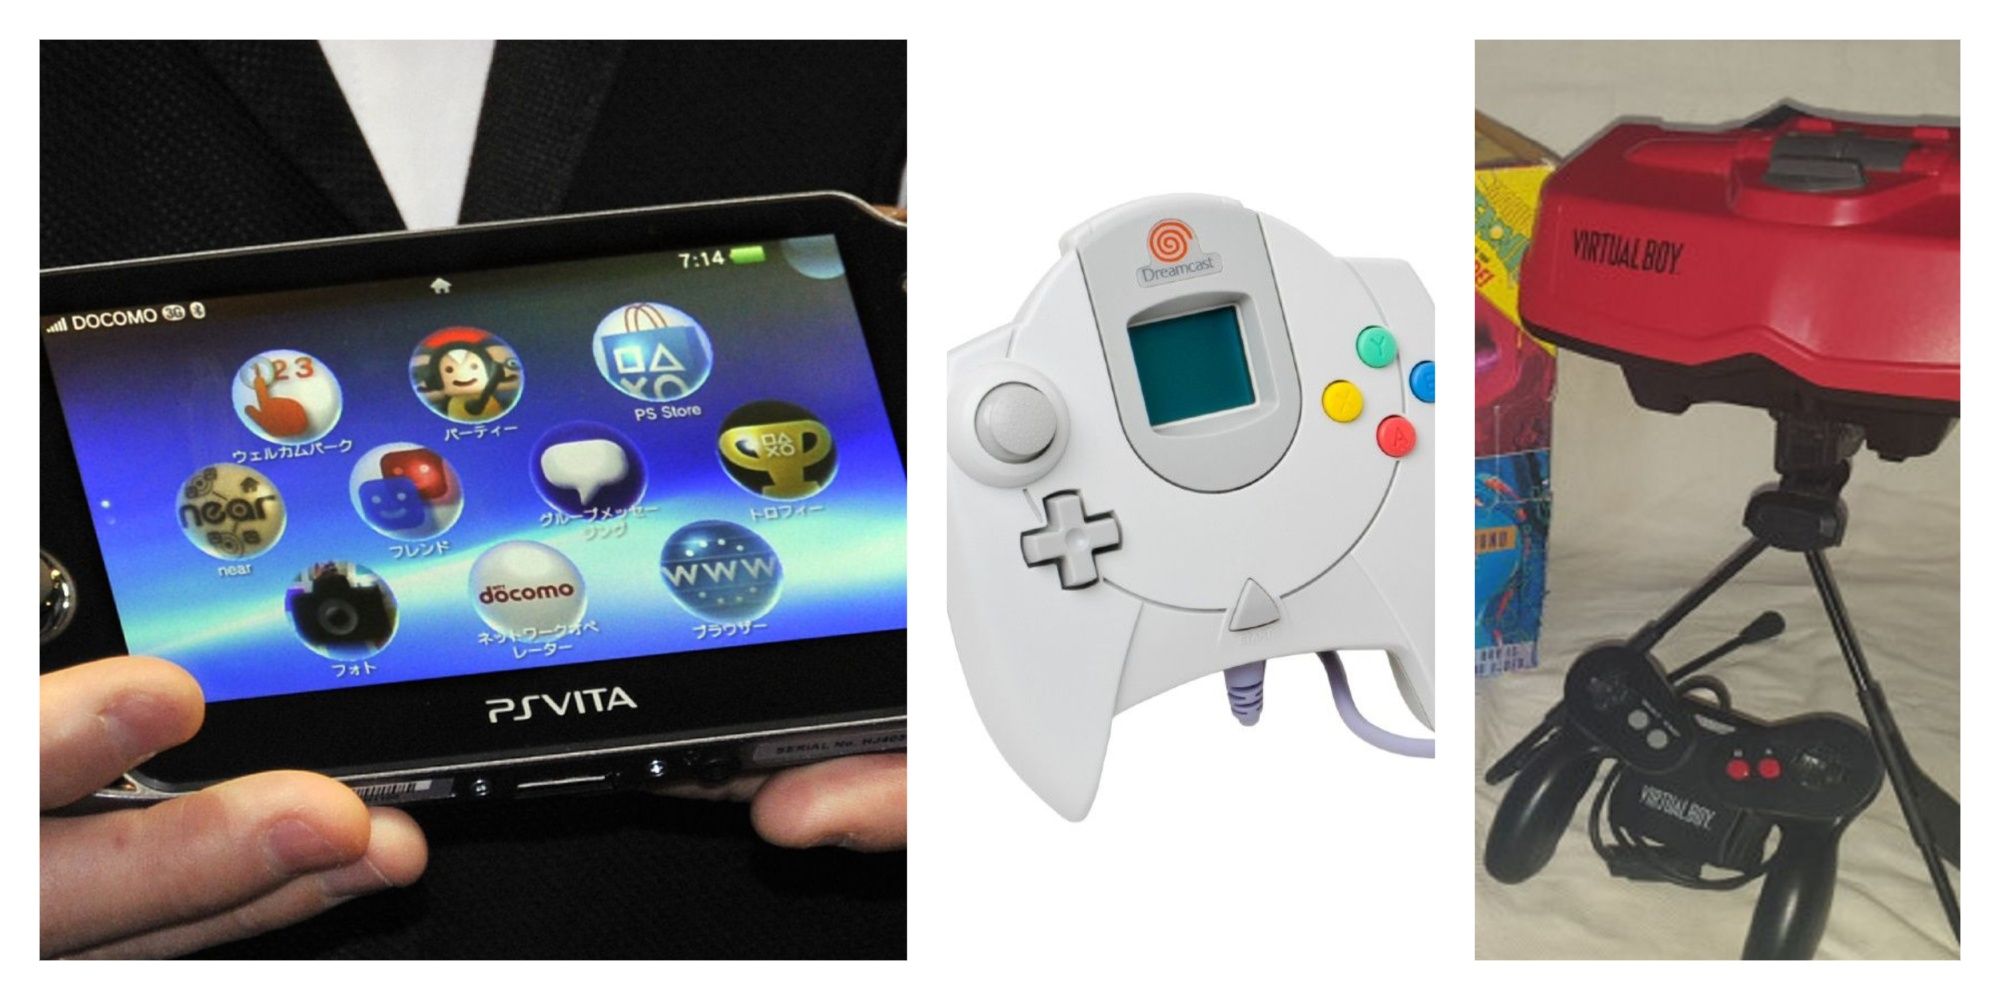 PlayStation Vita, SEGA Dreamcast controller, Virtual Boy with Controller